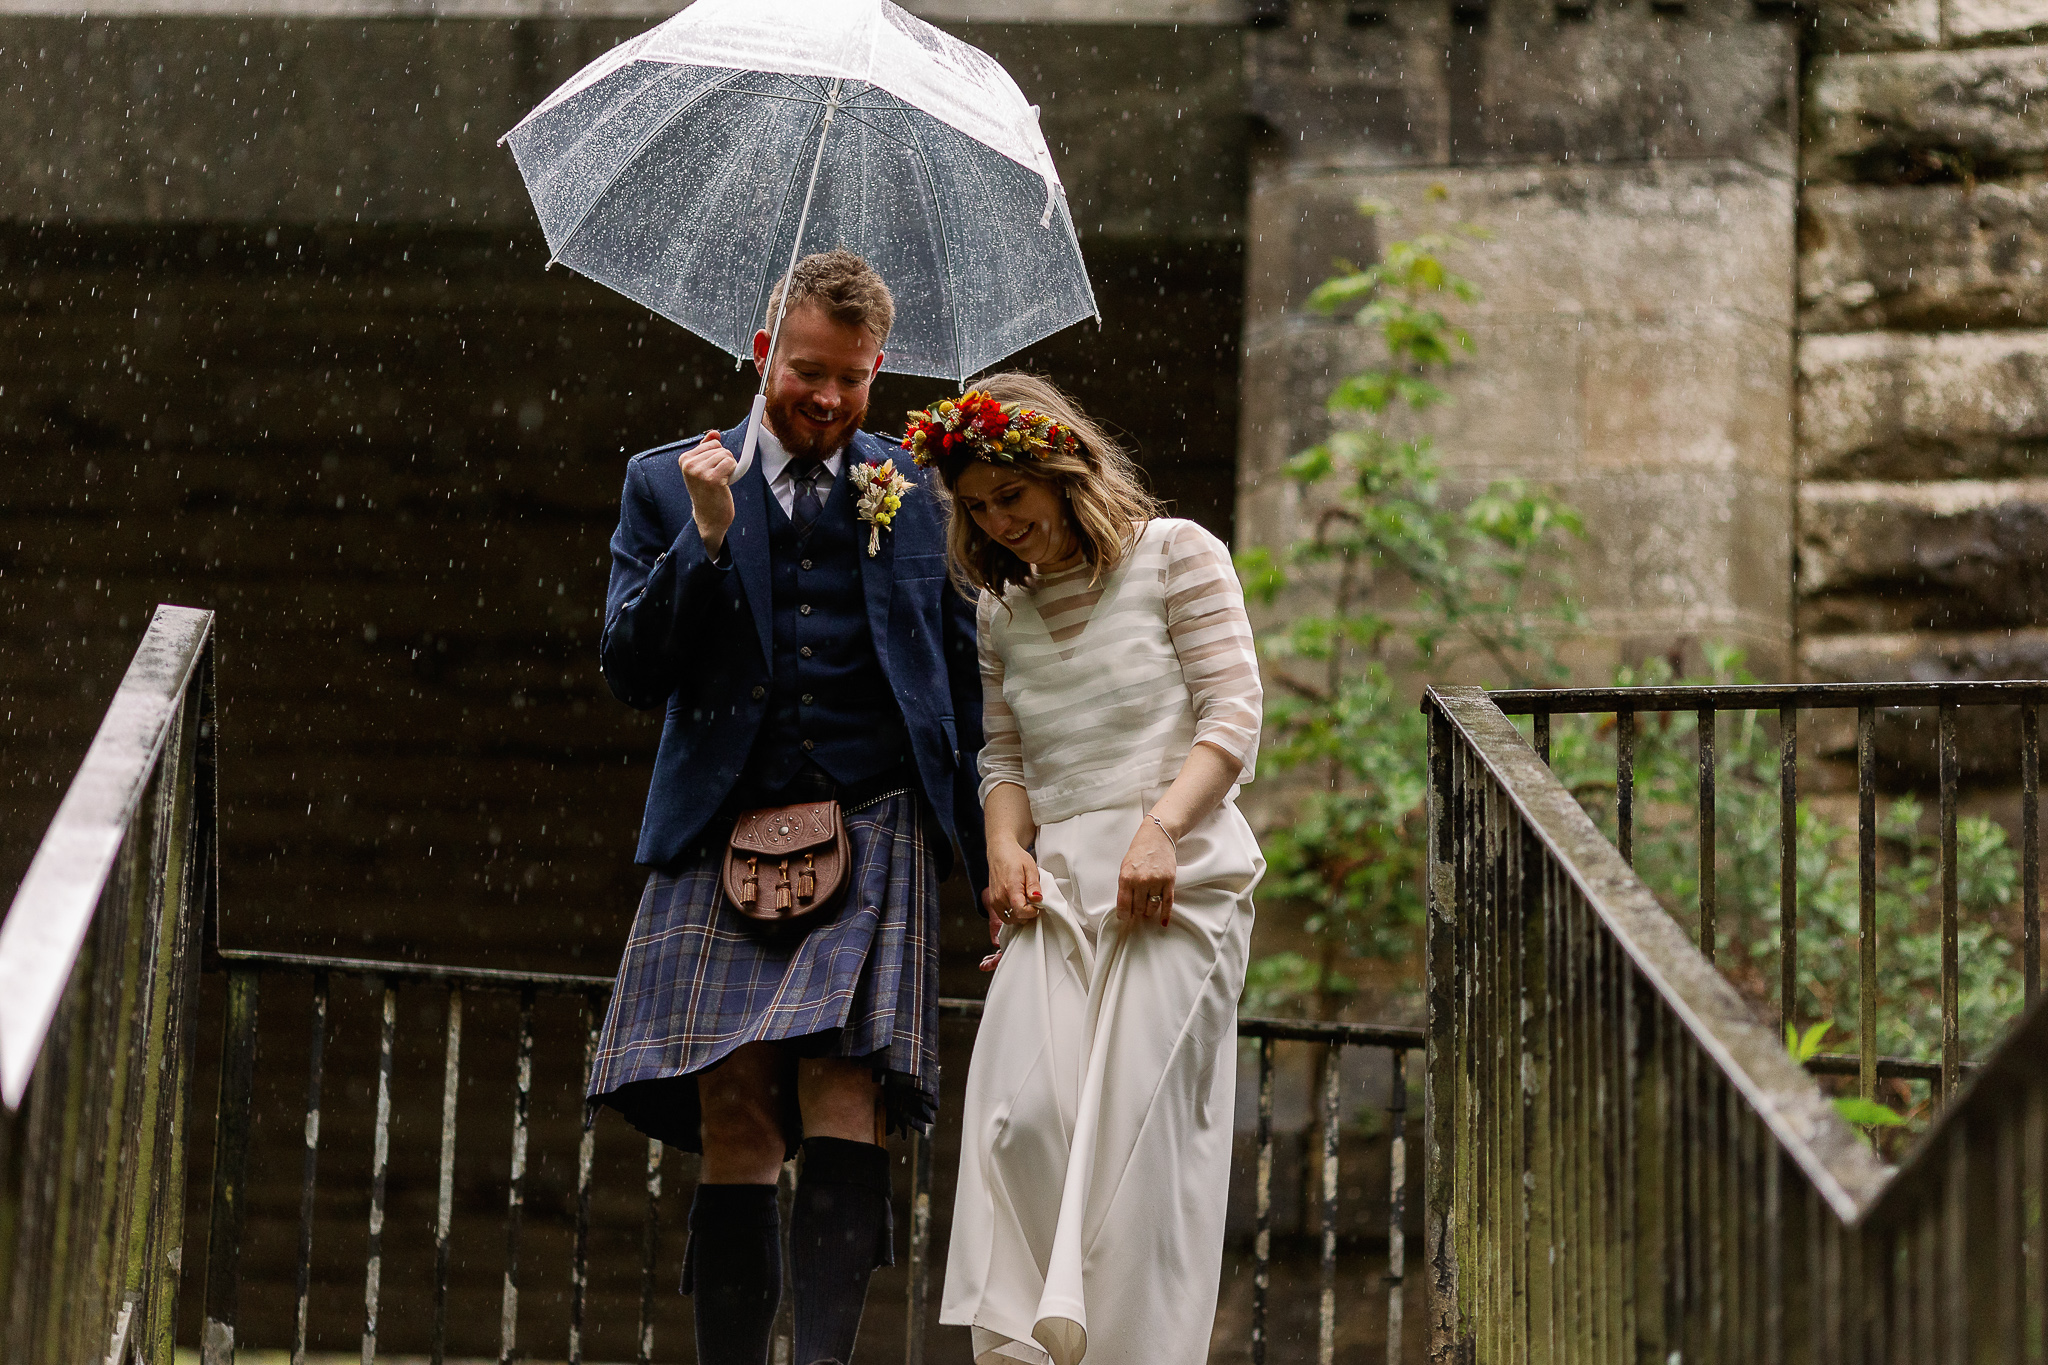 Wedding Portraits in the rain 